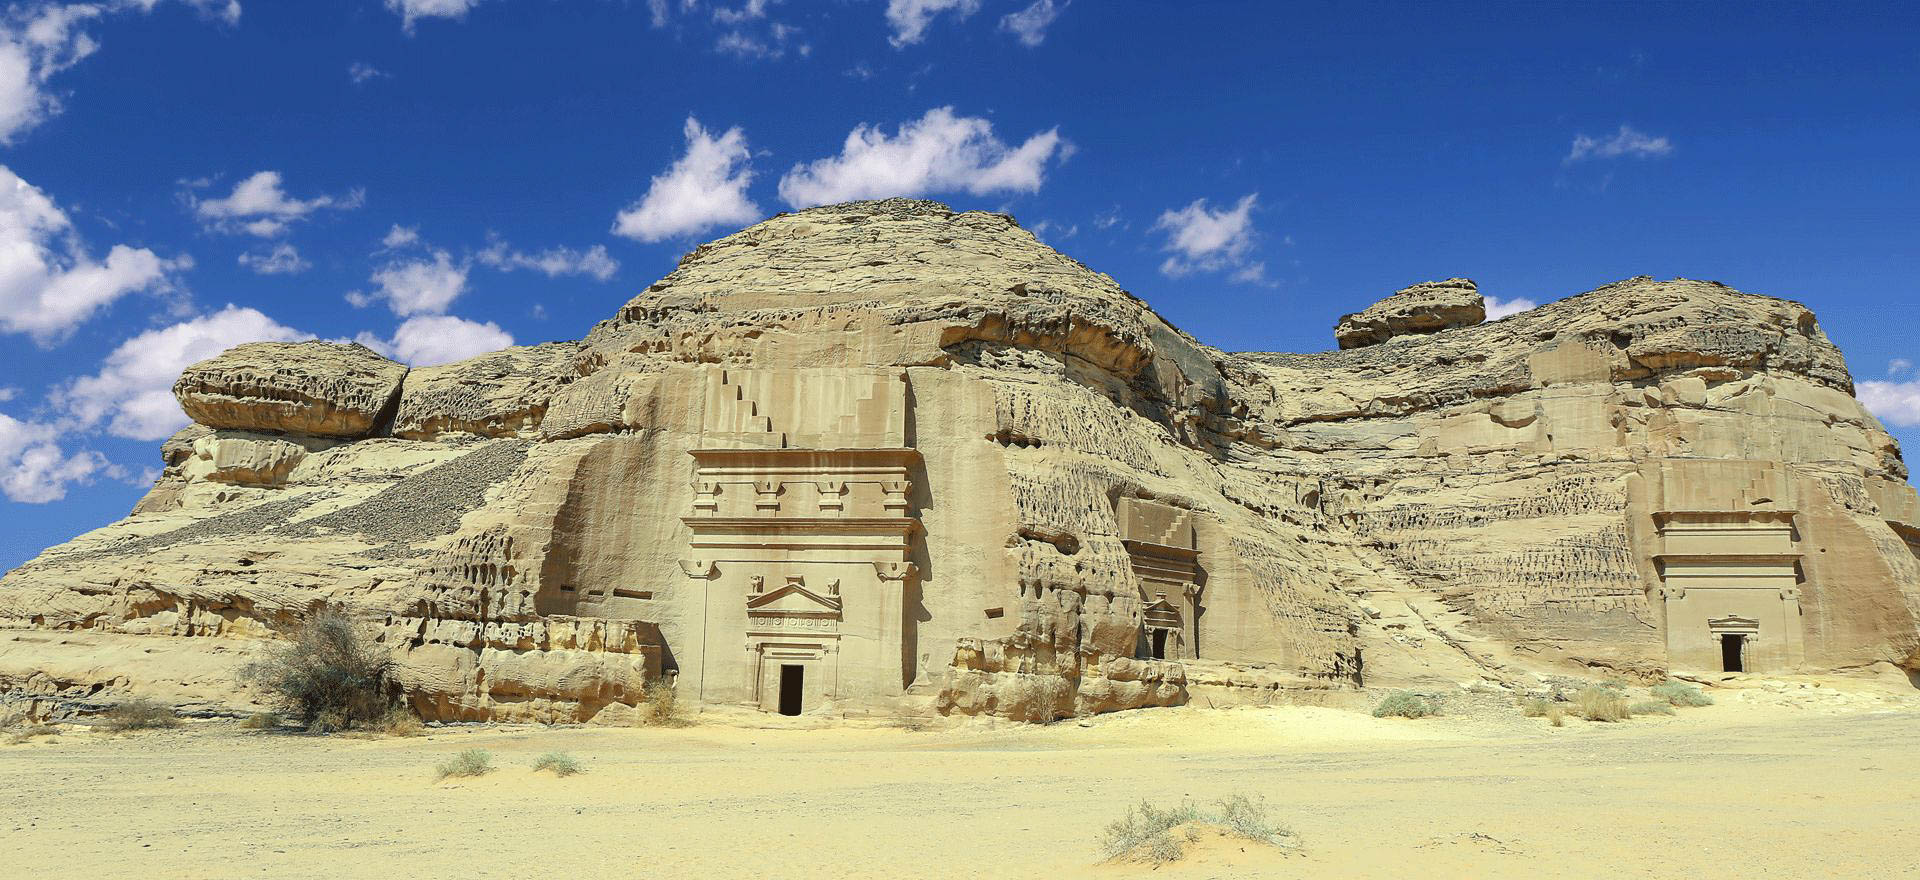 Ancient Nabataean tombs at Madain Saleh - Saudi Arabia Holidays and Tours